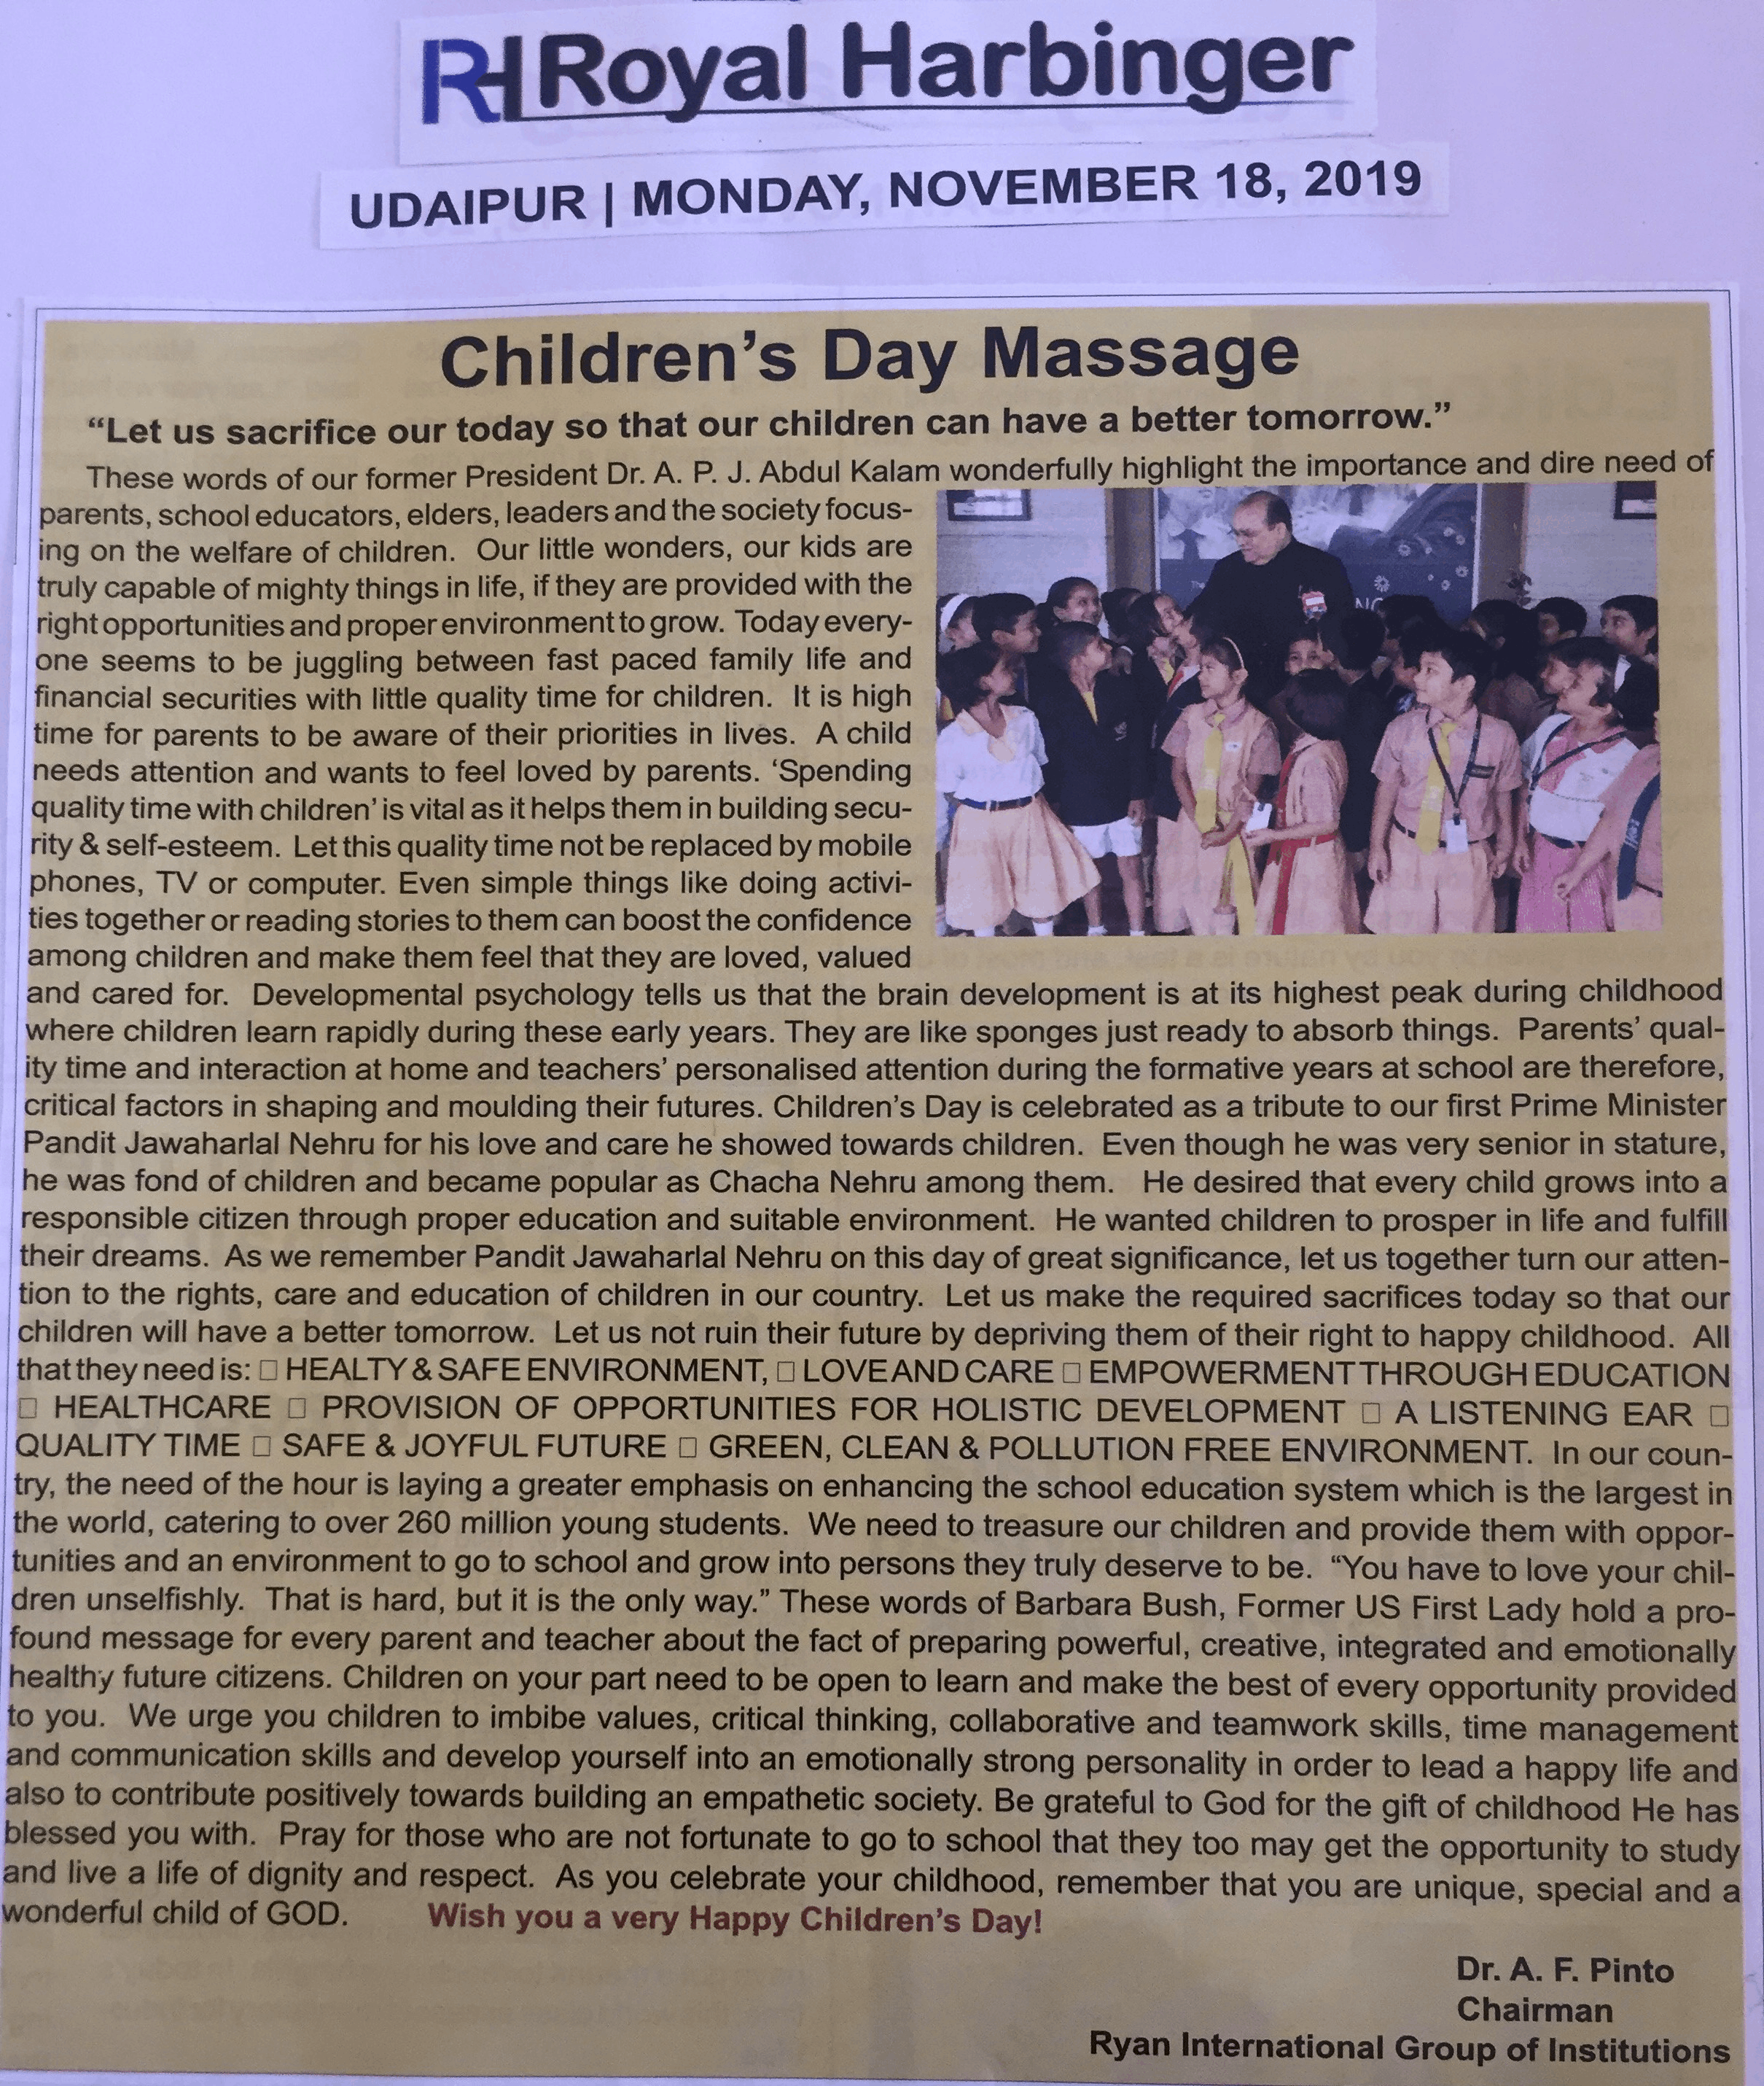 CHILDREN’S DAY MESSAGE BY RESPECTED CHAIRMAN SIR - Ryan international School, Udaipur